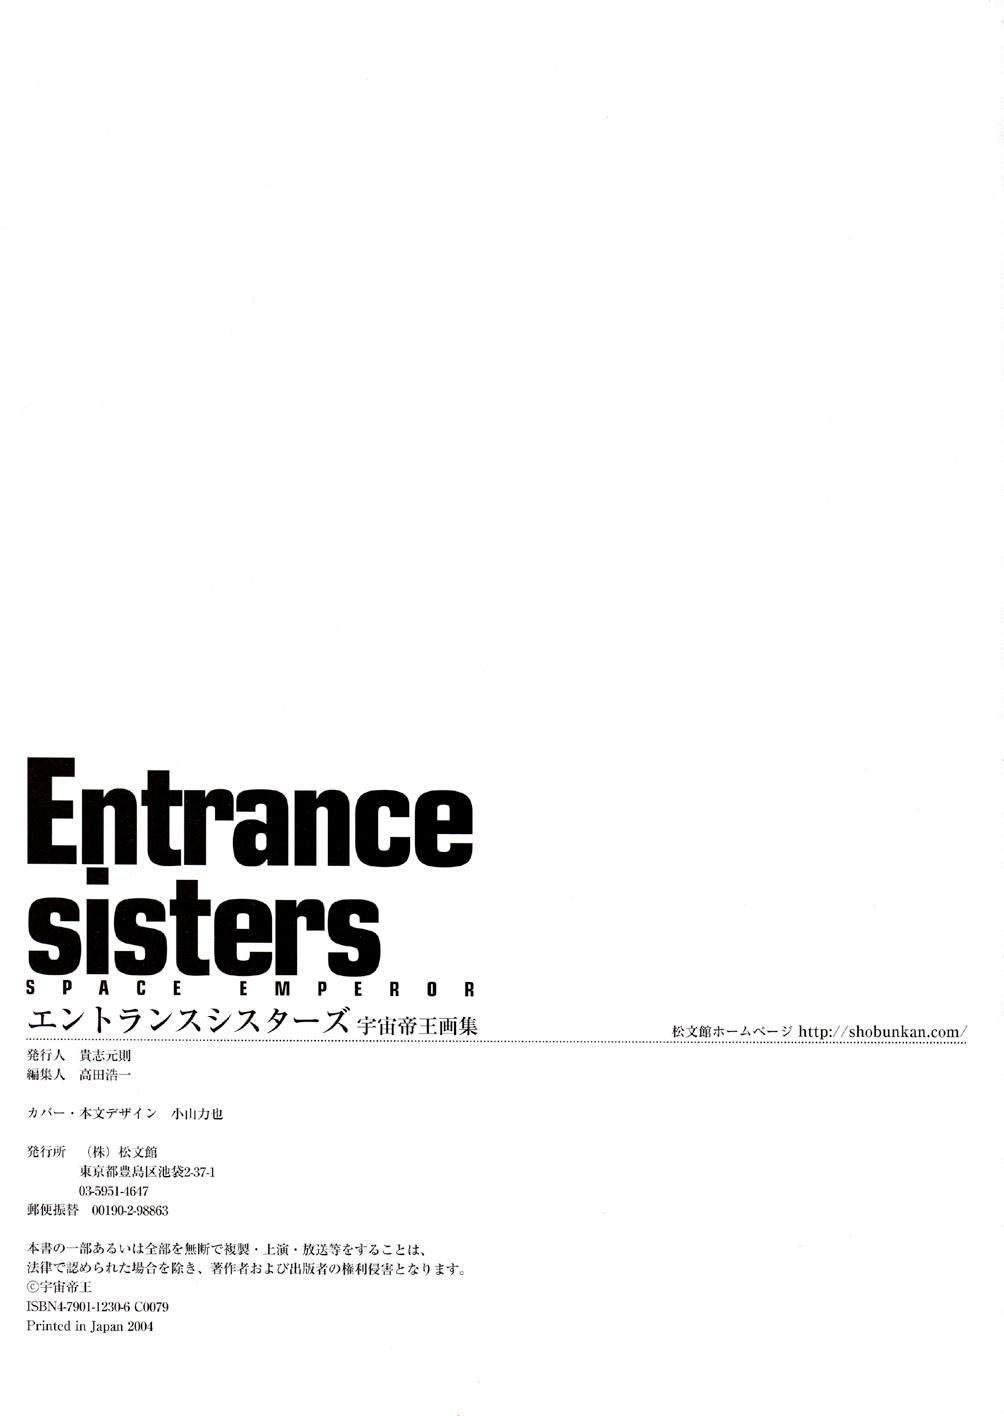 Entrance sisters 153